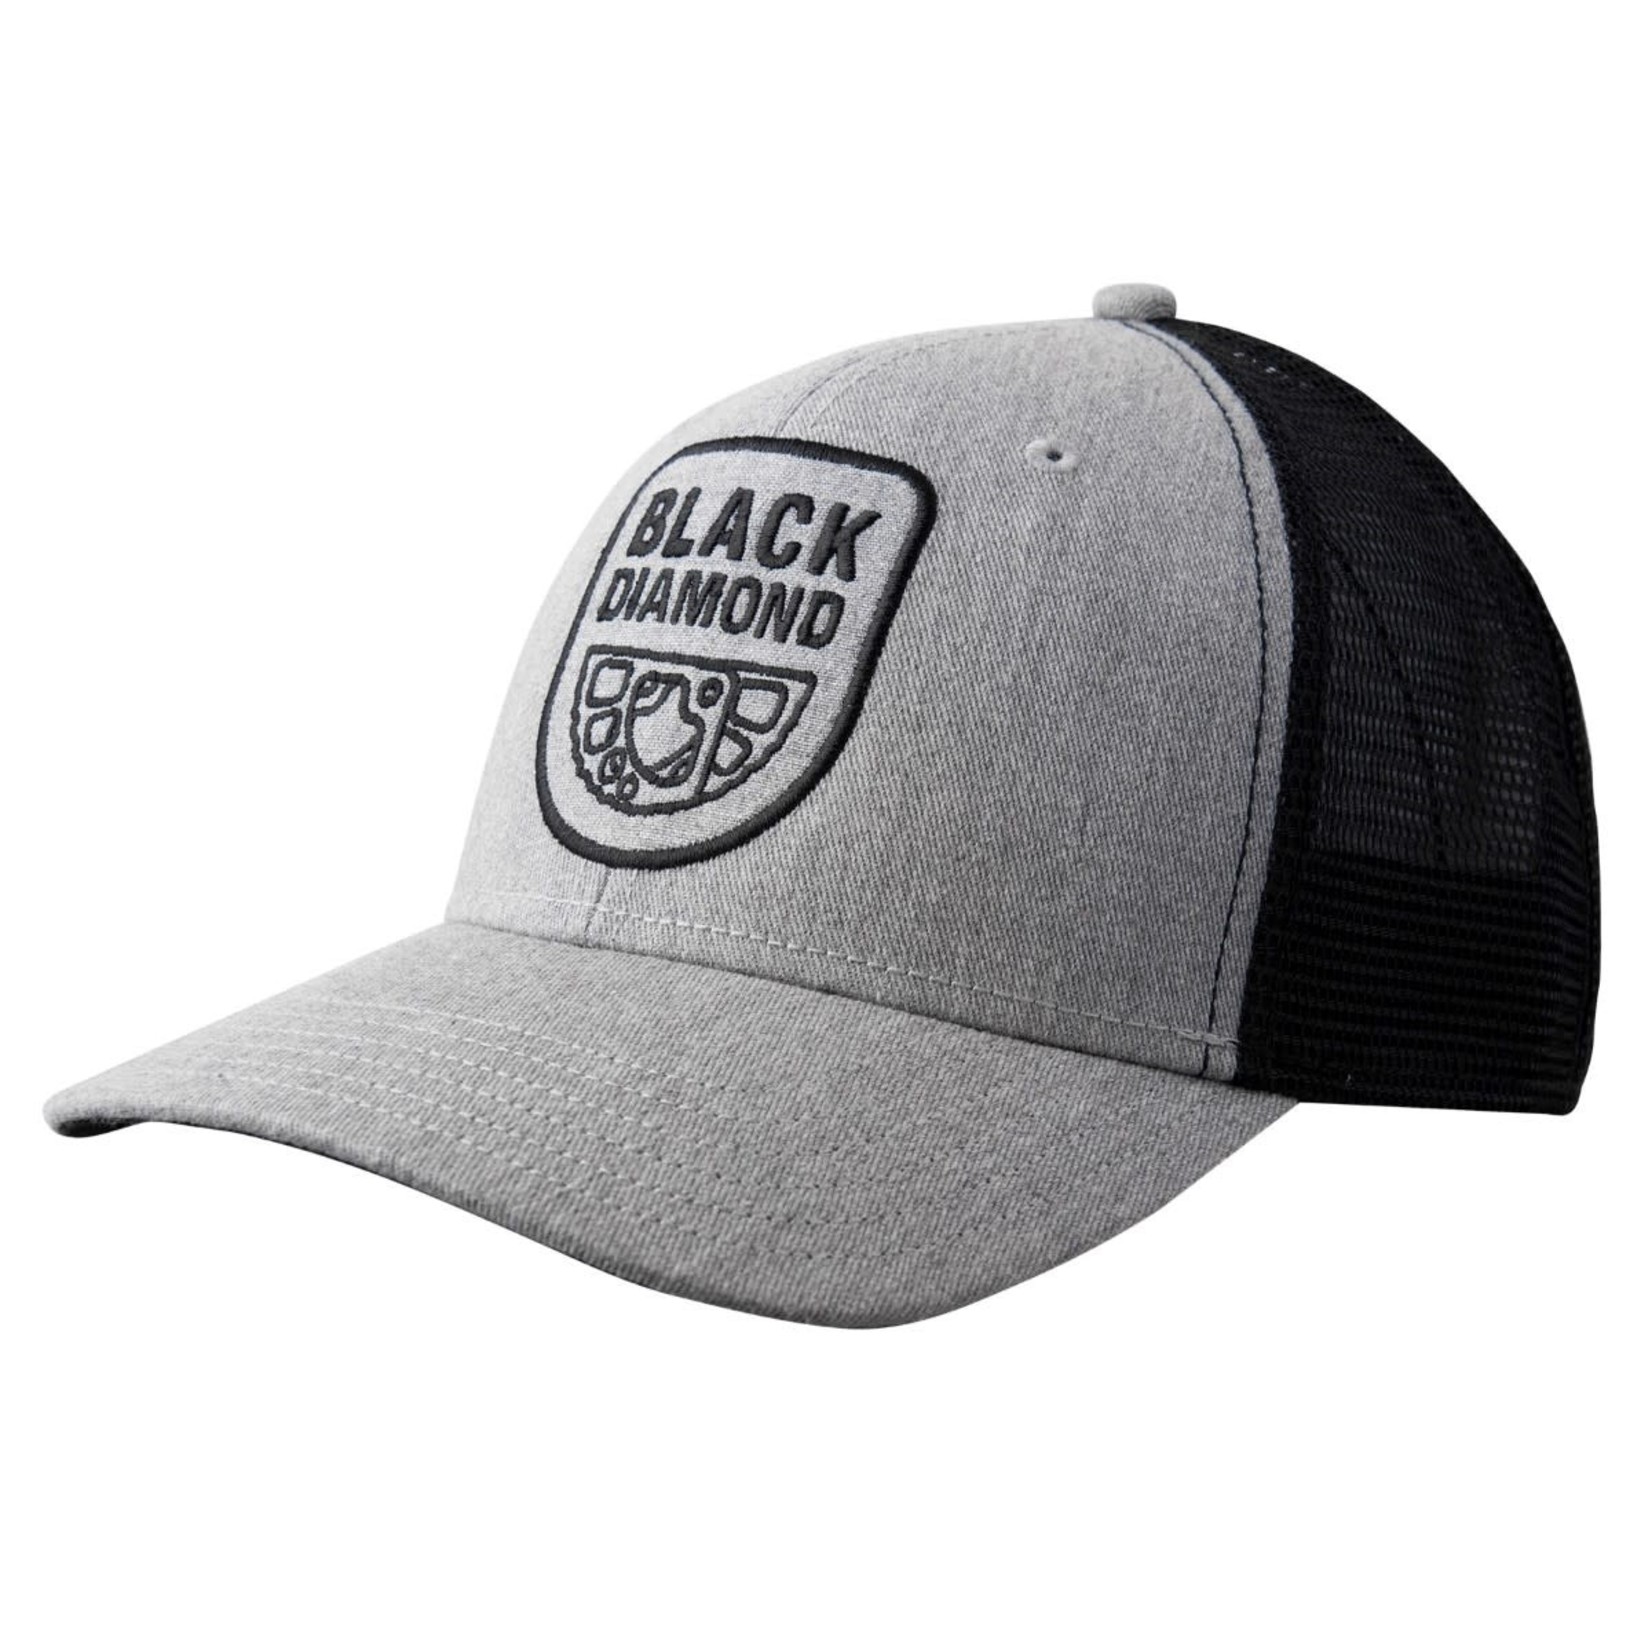 Black Diamond Black Diamond Trucker Hat - Homme